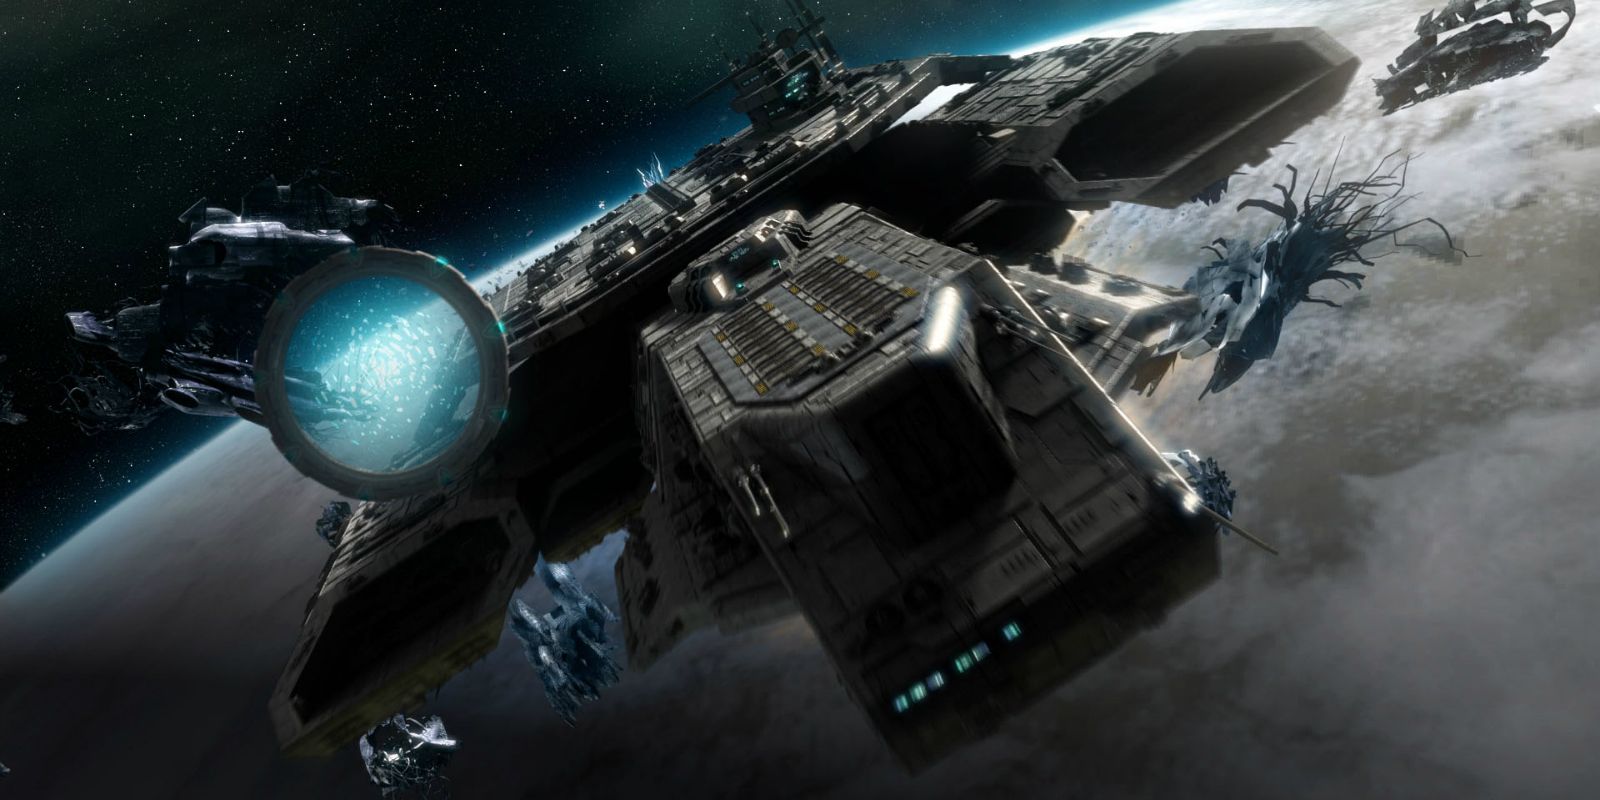 Daedalus flying through space in Stargate Atlantis